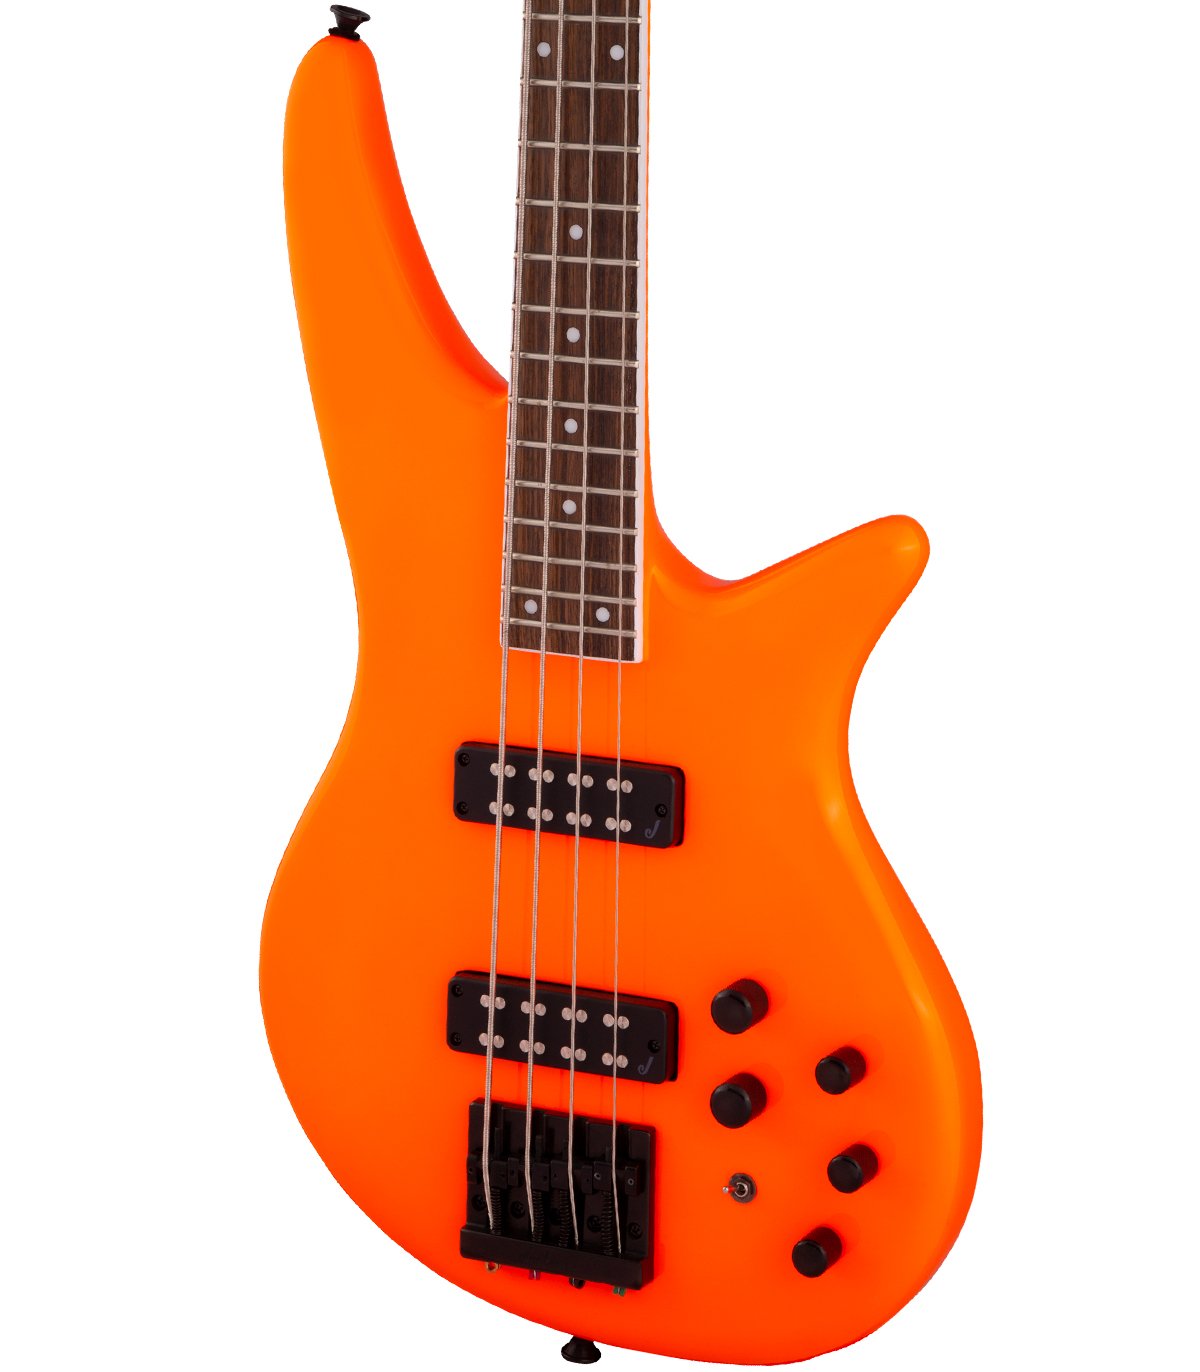 Orange bass. Ibanez x Series. Jackson оранжевая. Спектр бас гитары. Orange Guitar.